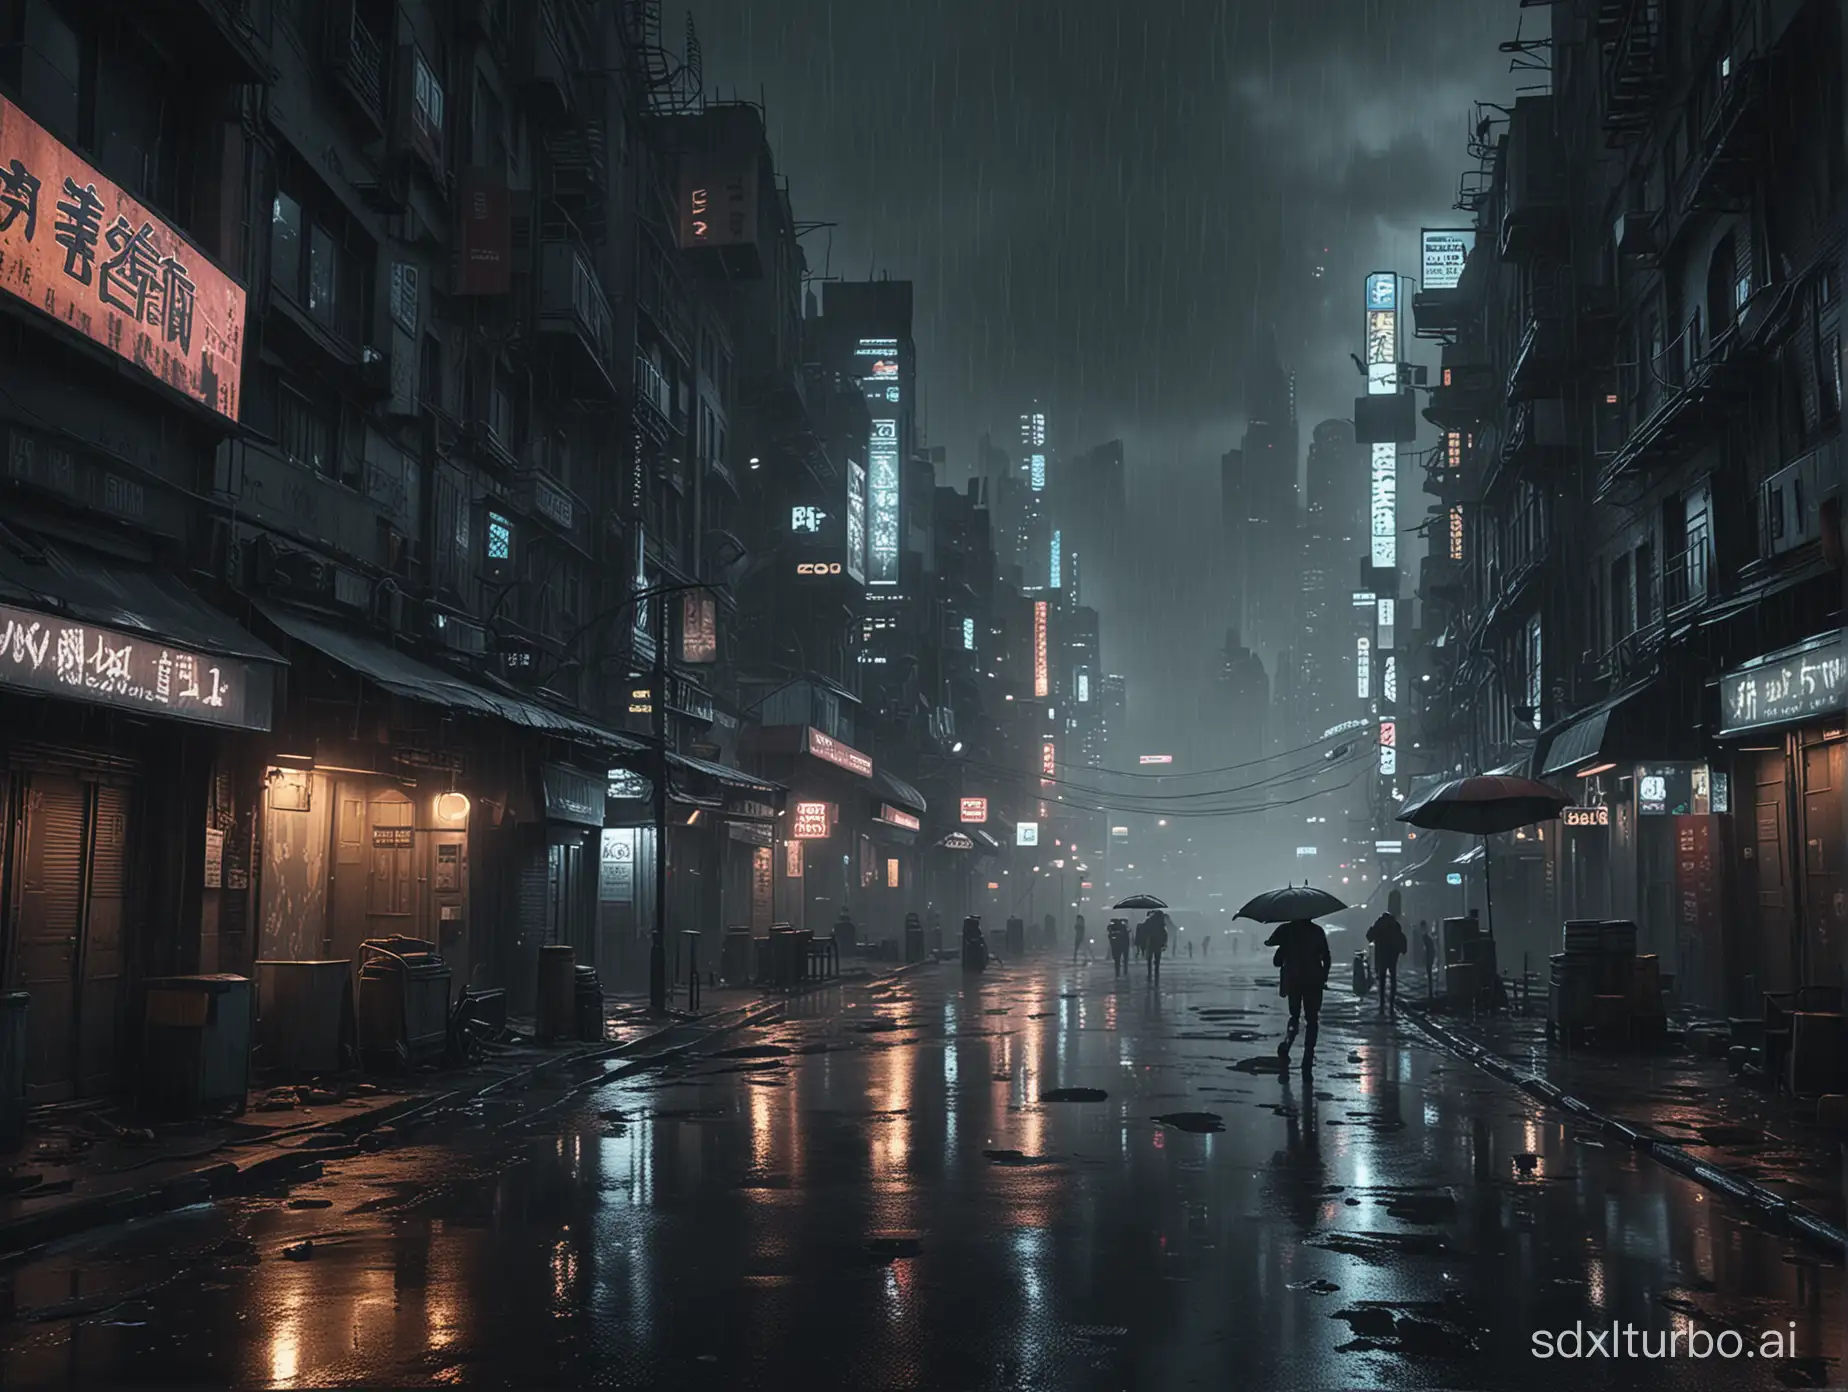 Dystopian-Cyberpunk-Poor-City-at-Night-HyperRealistic-8K-Rainy-Scene